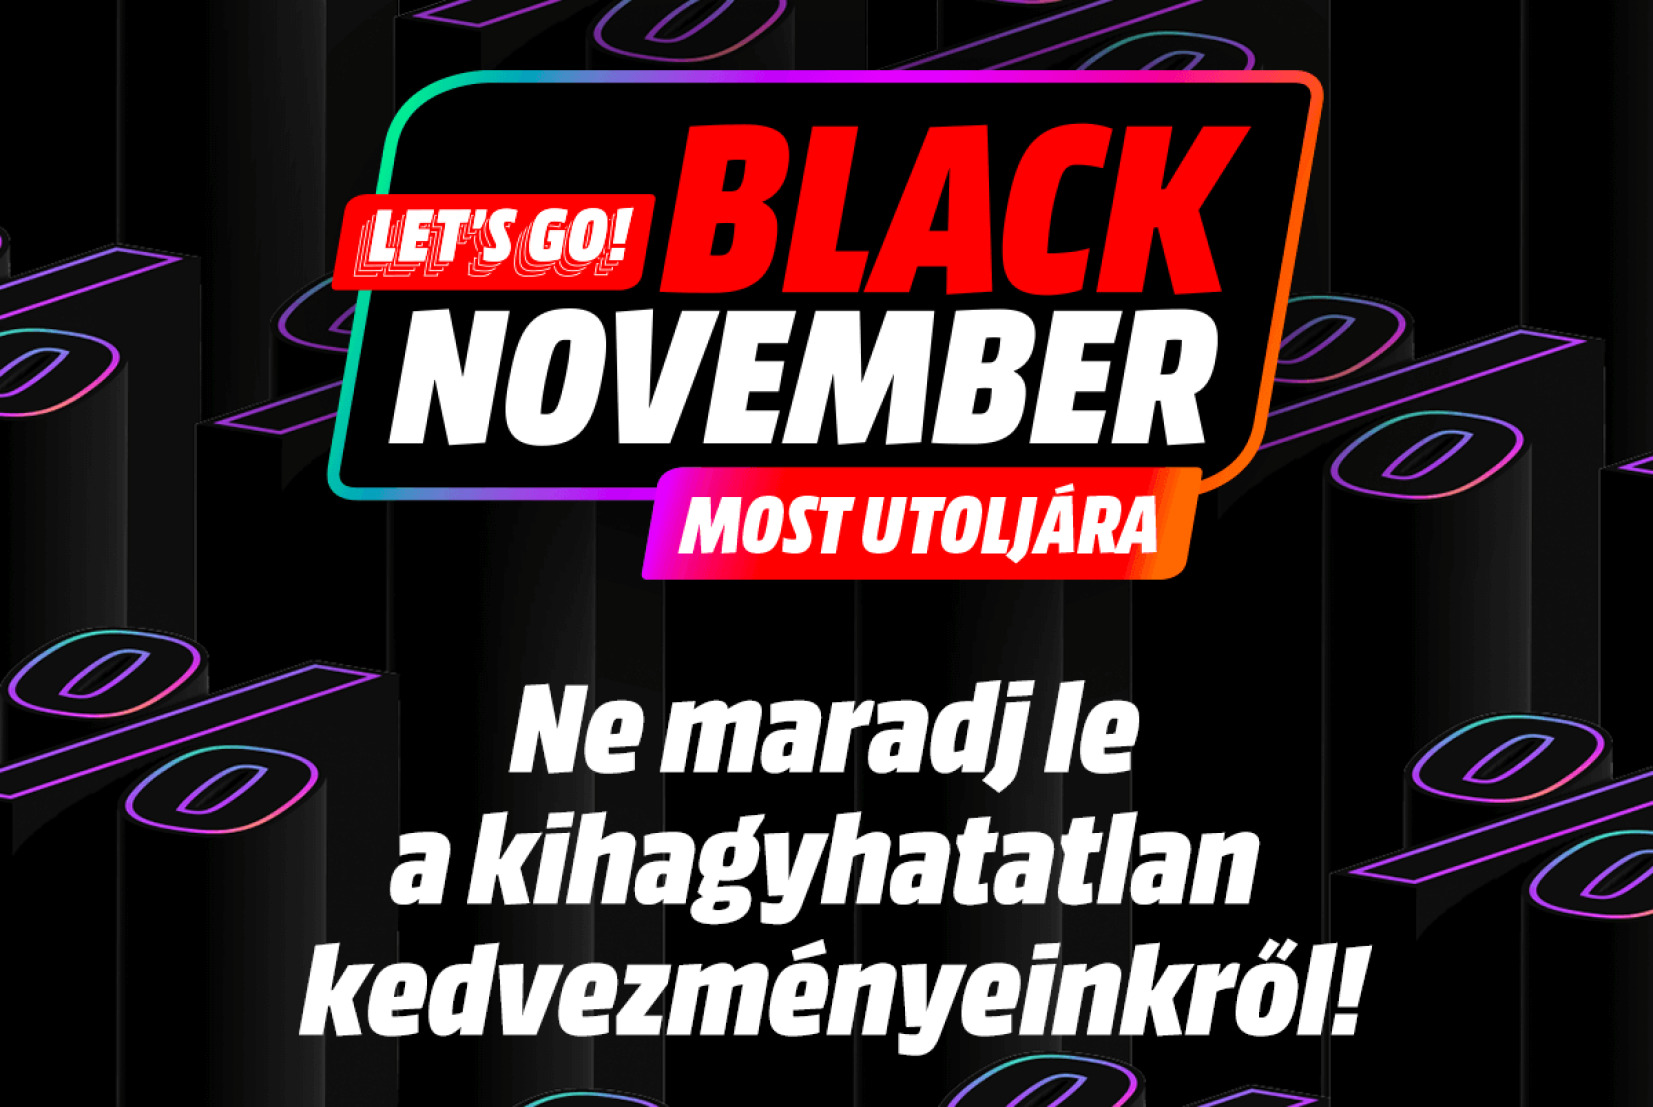 Black November a MediaMarktban!